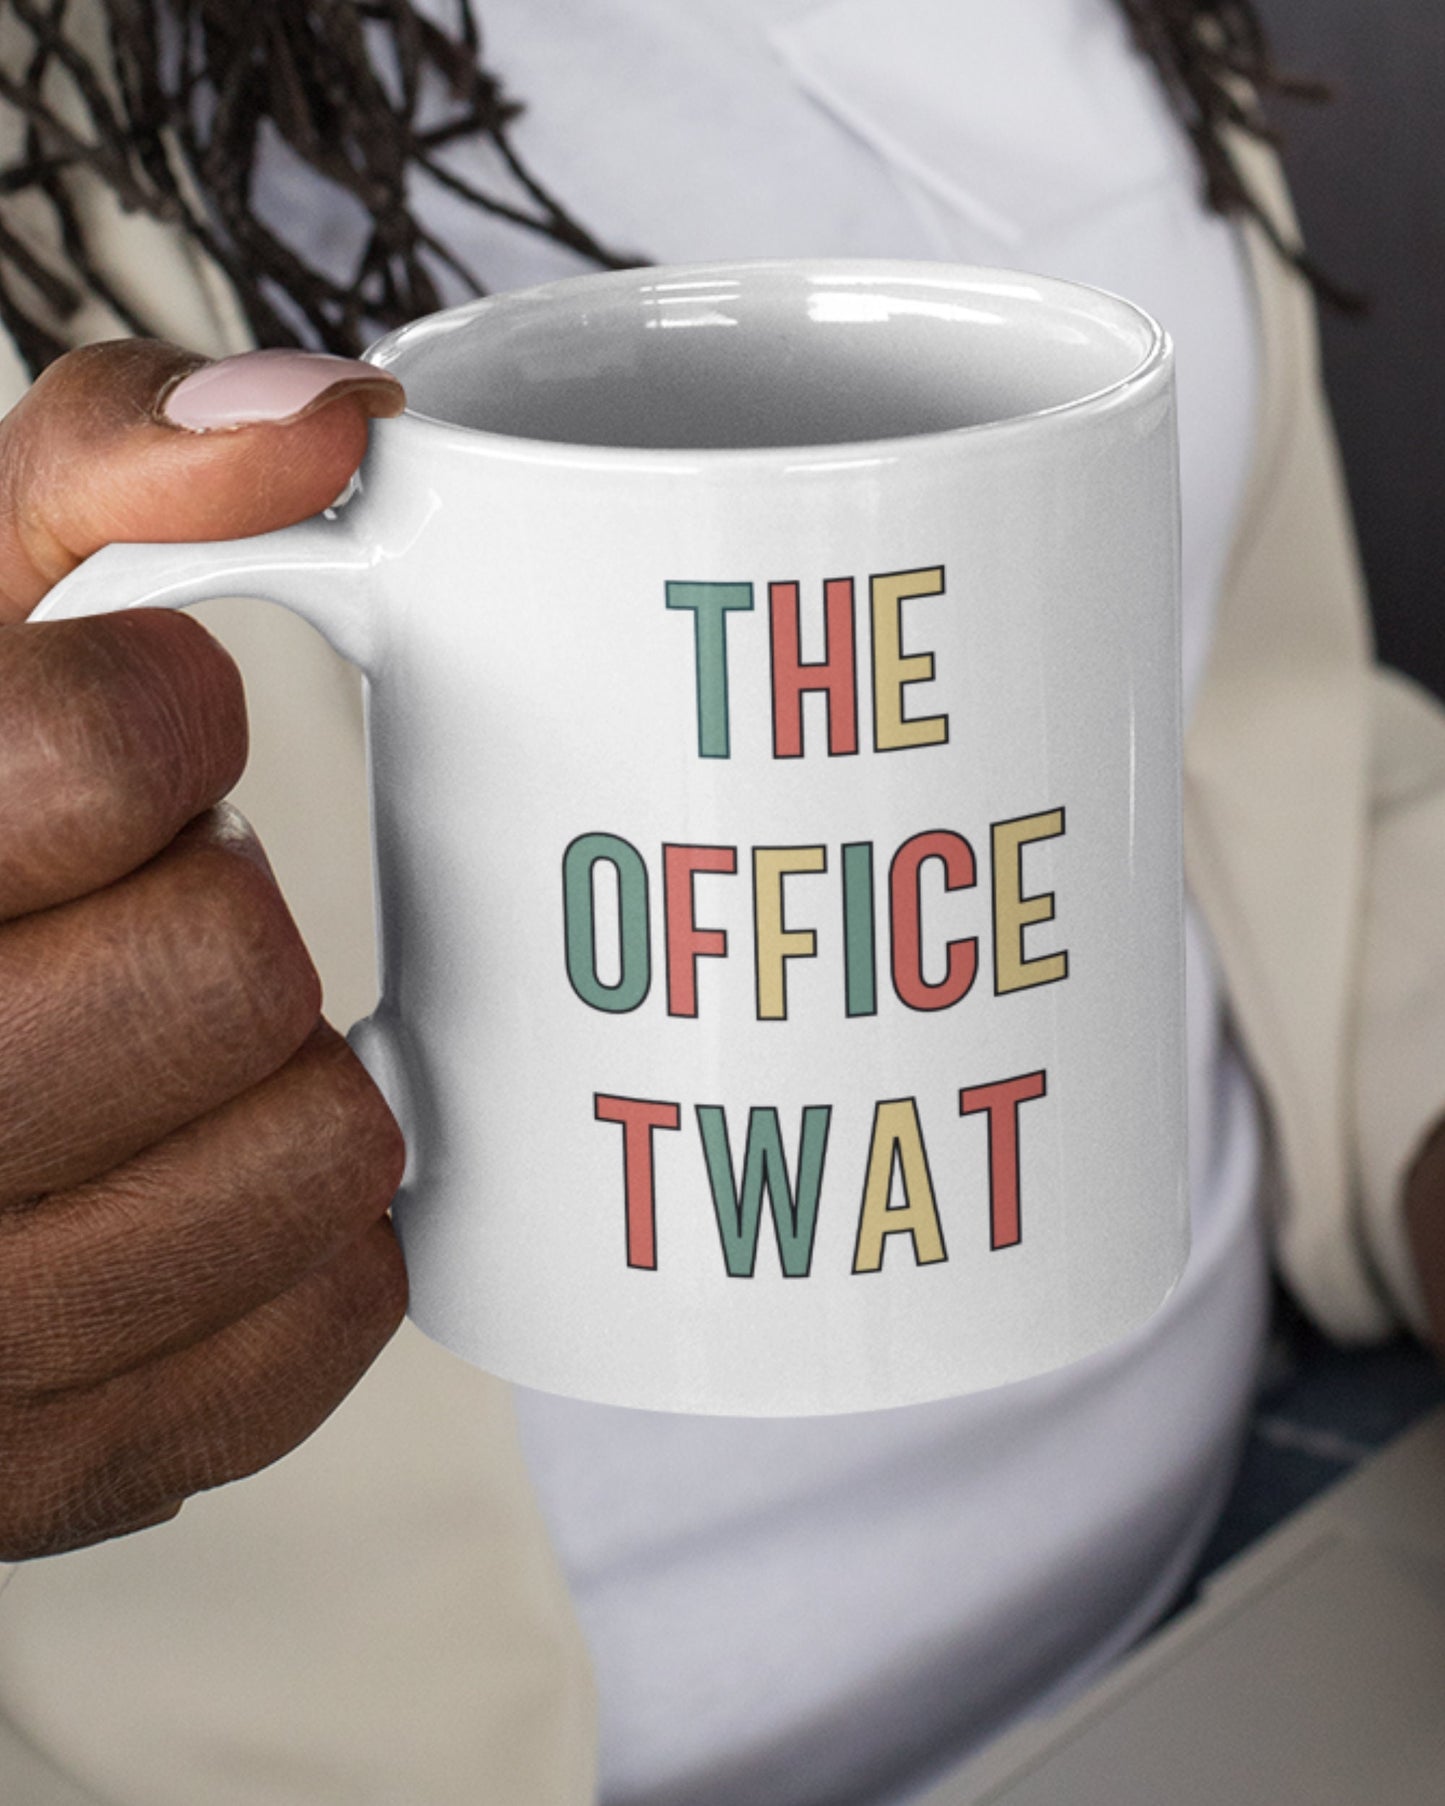 The office twat mug, coworker gift, colleague gift, work bestie gift